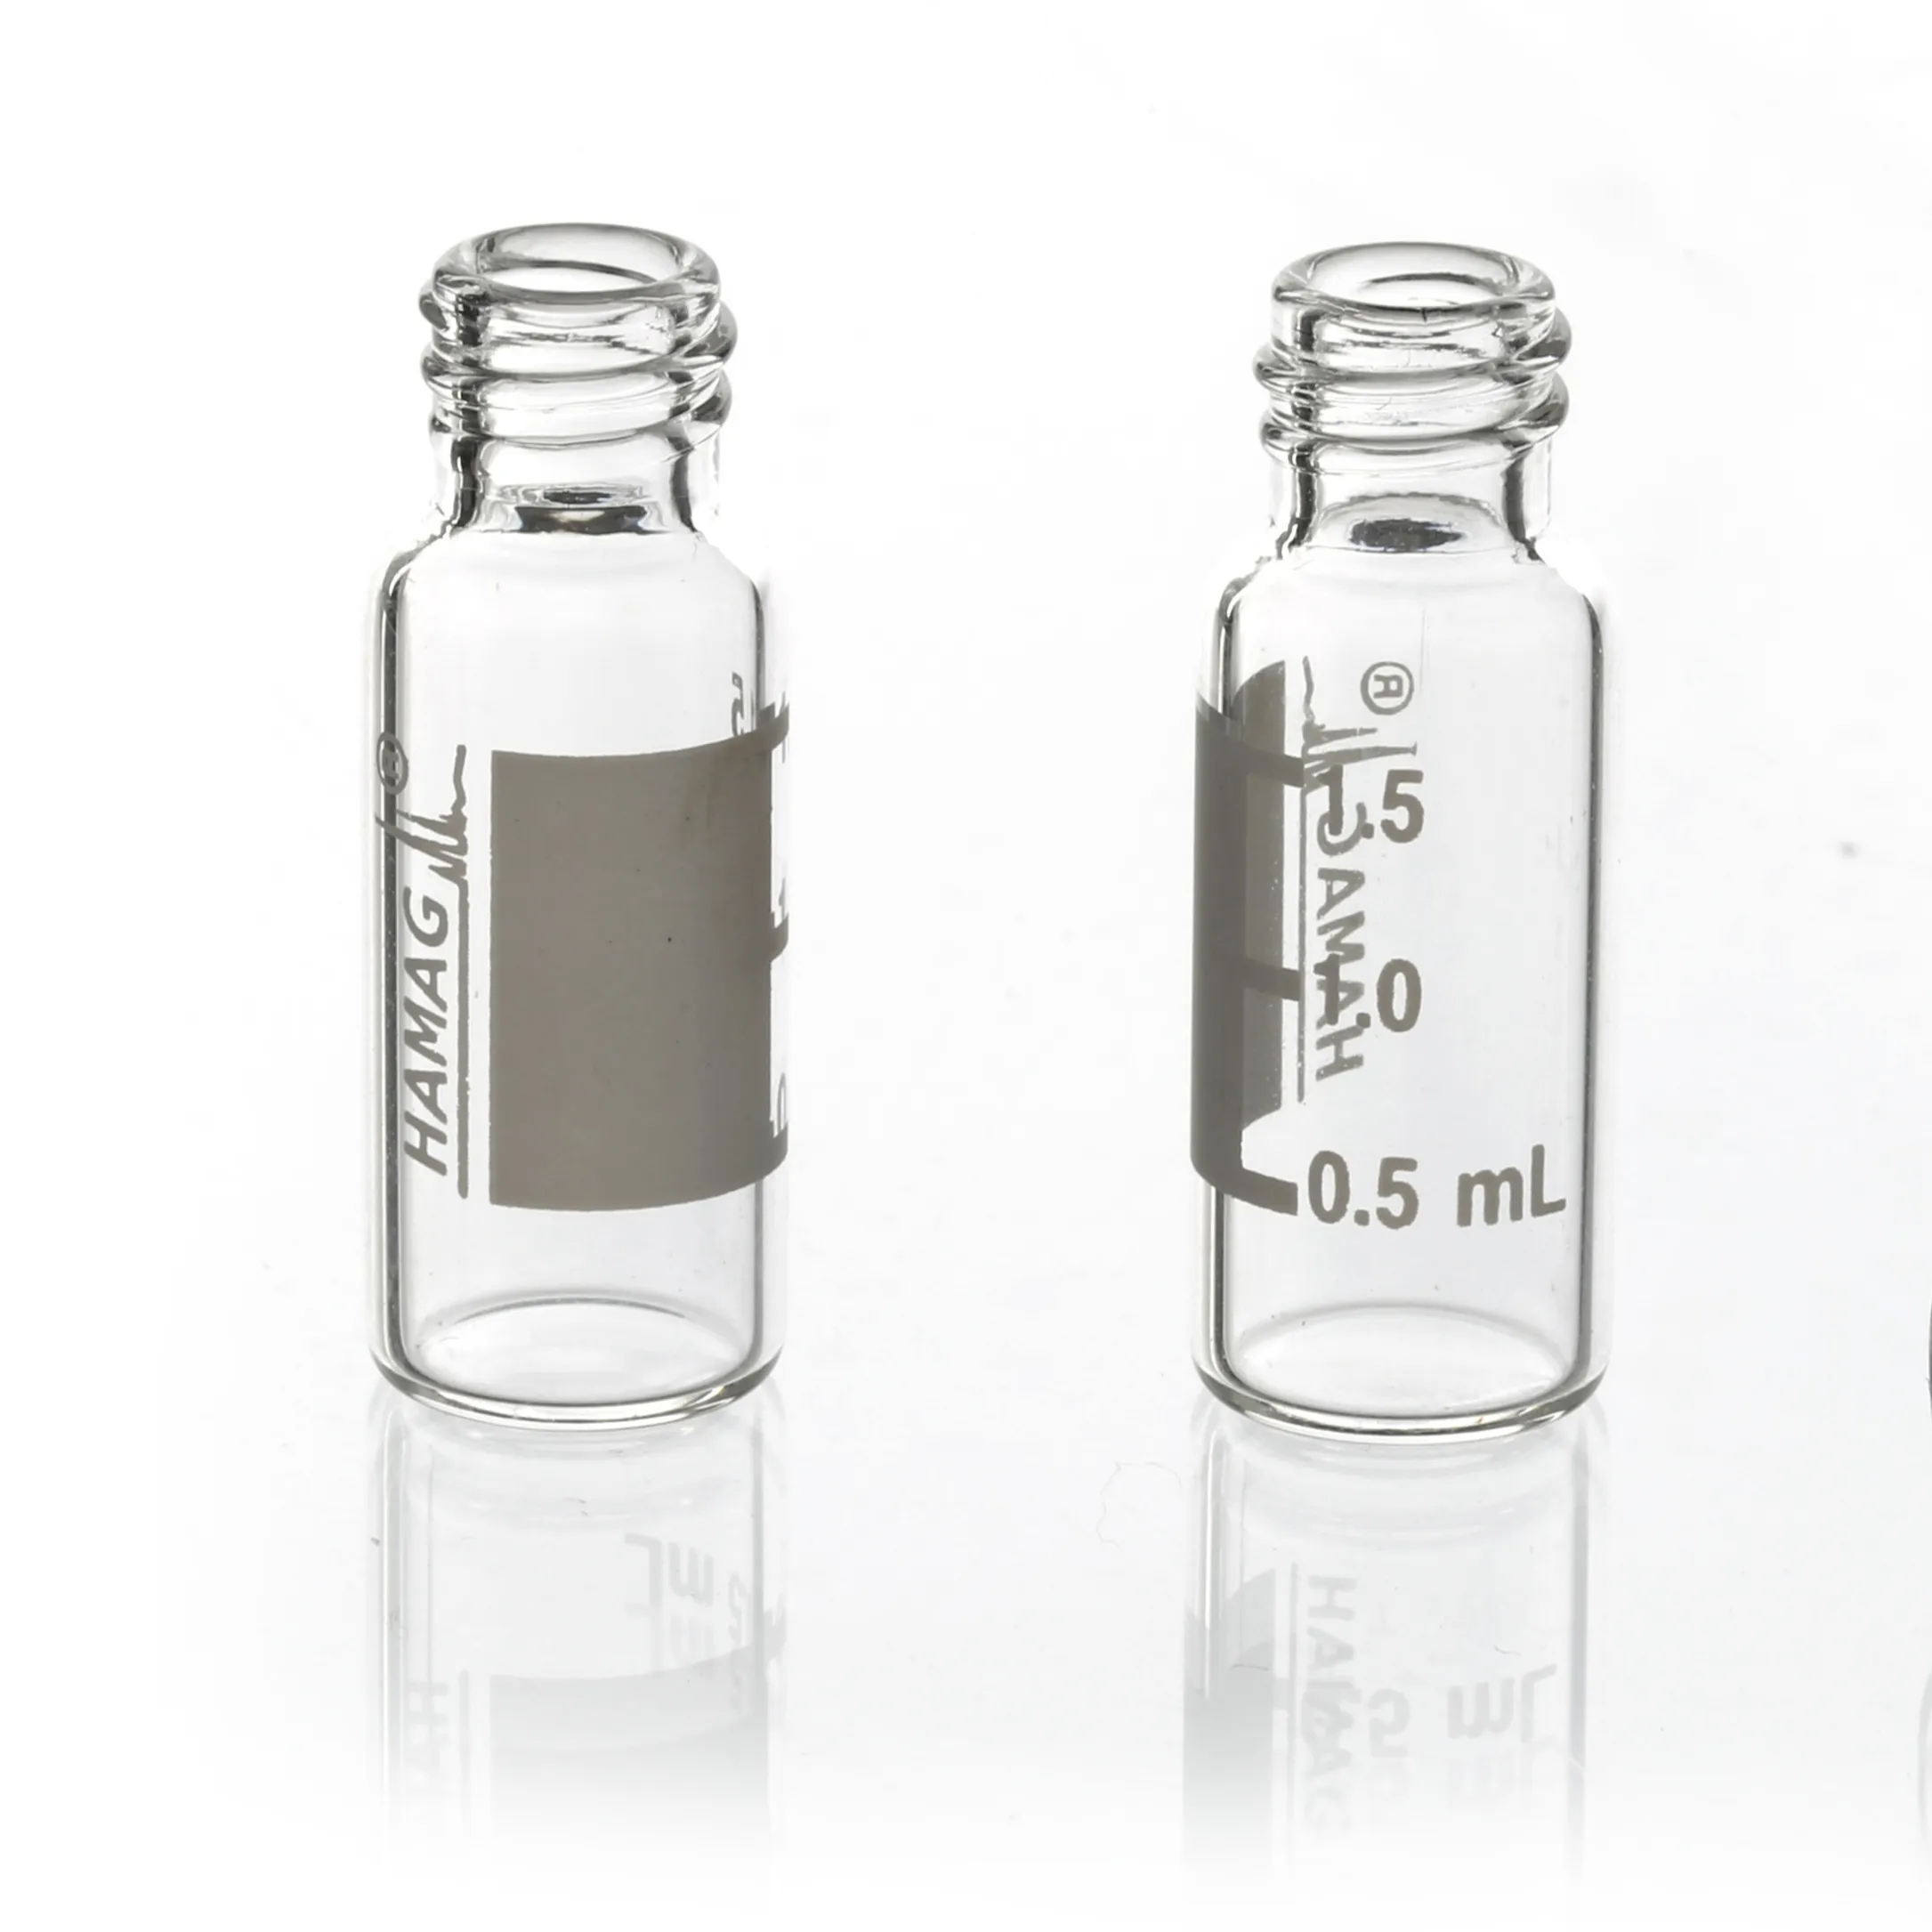 1.5ml HPLC laboratory vial for auto sampler 8-425 Standard screw thread shimadzu hplc sample vials with patch